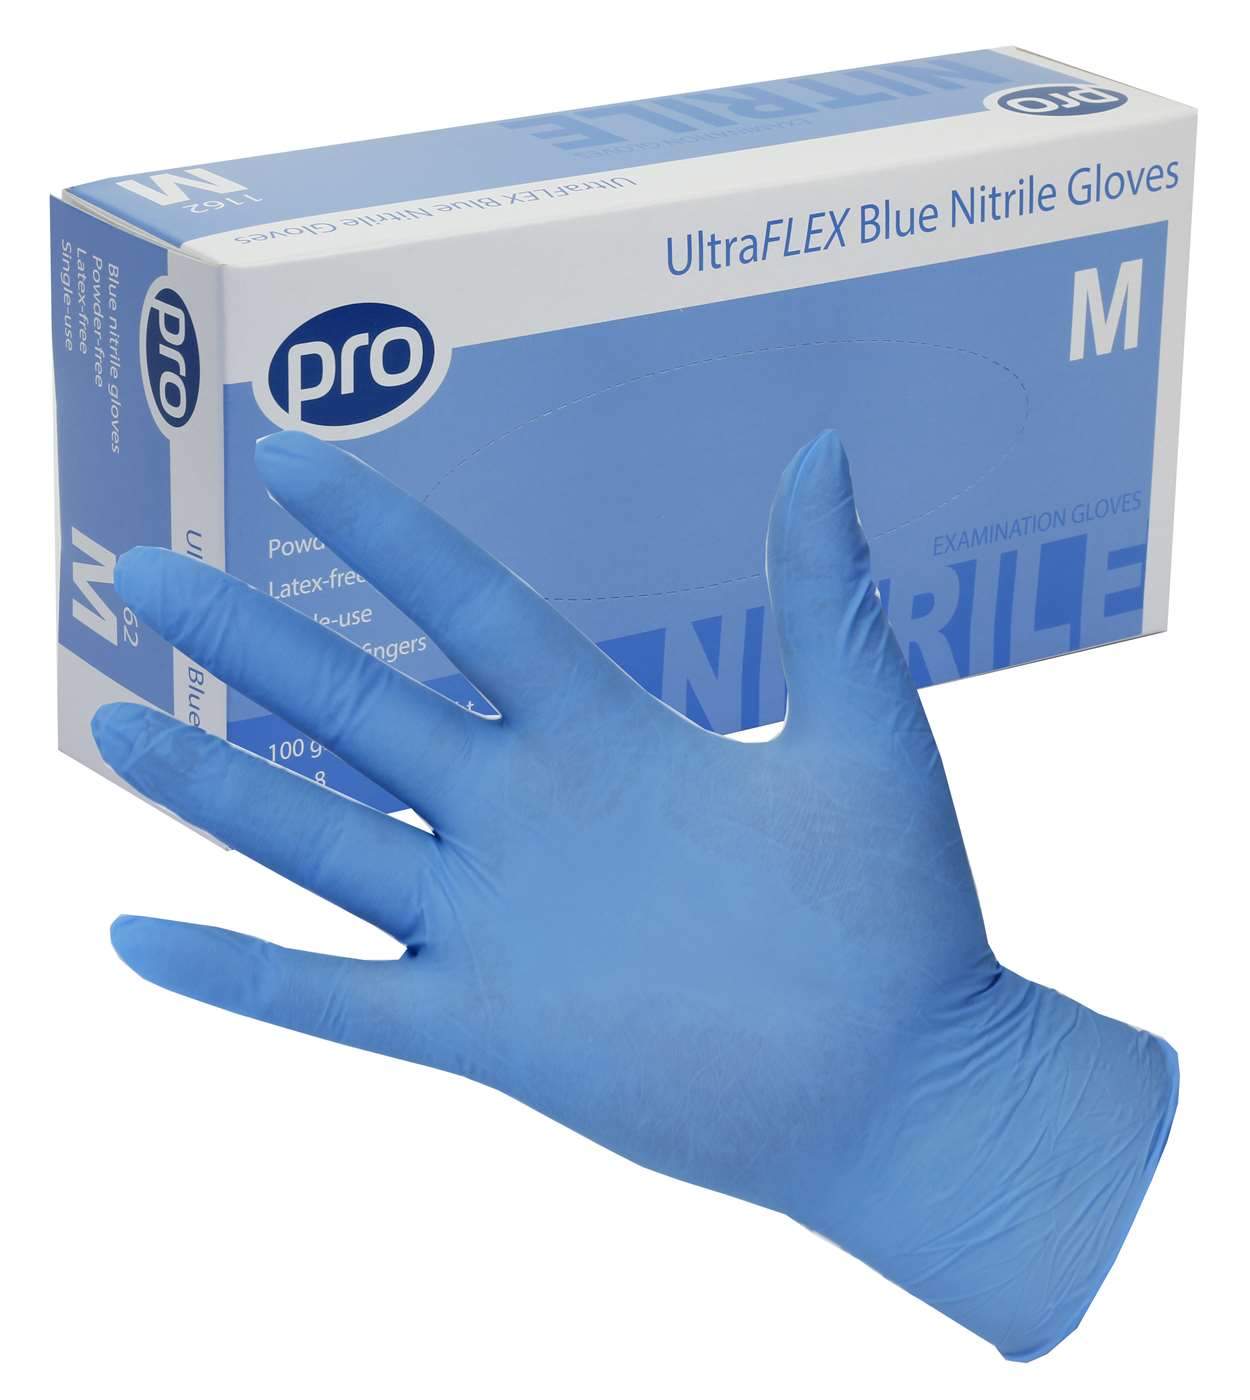 1,000 PRO Ultraflex Nitrile Gloves Blue Powder Free